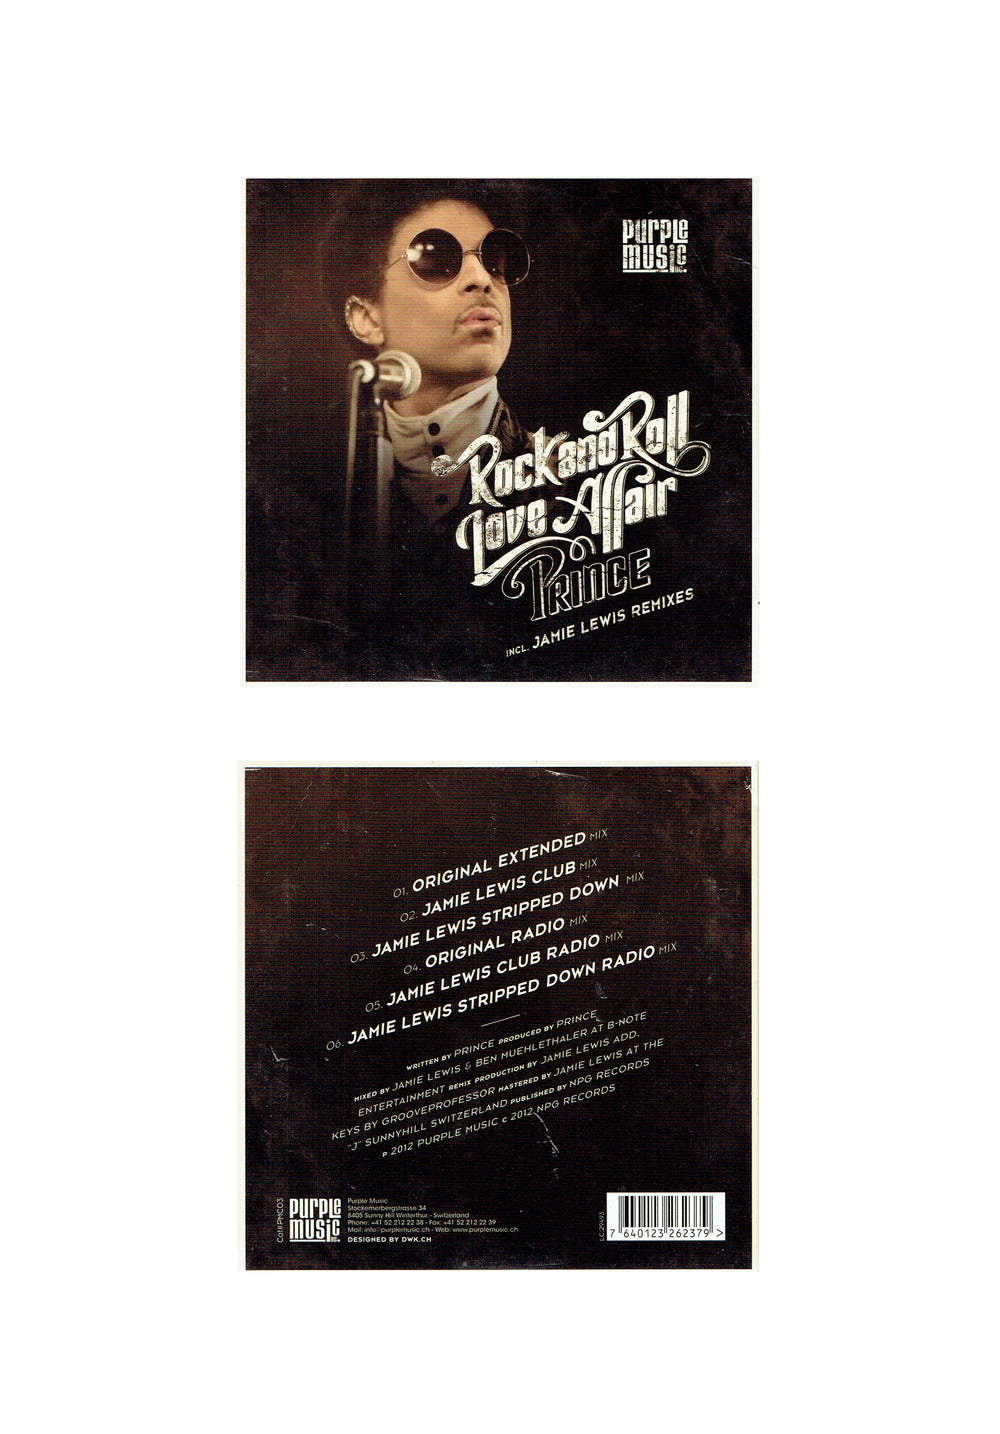 Prince Rock and Roll Love Affair CD EU 5 Inch CD Single 2012 6 Tracks RARE